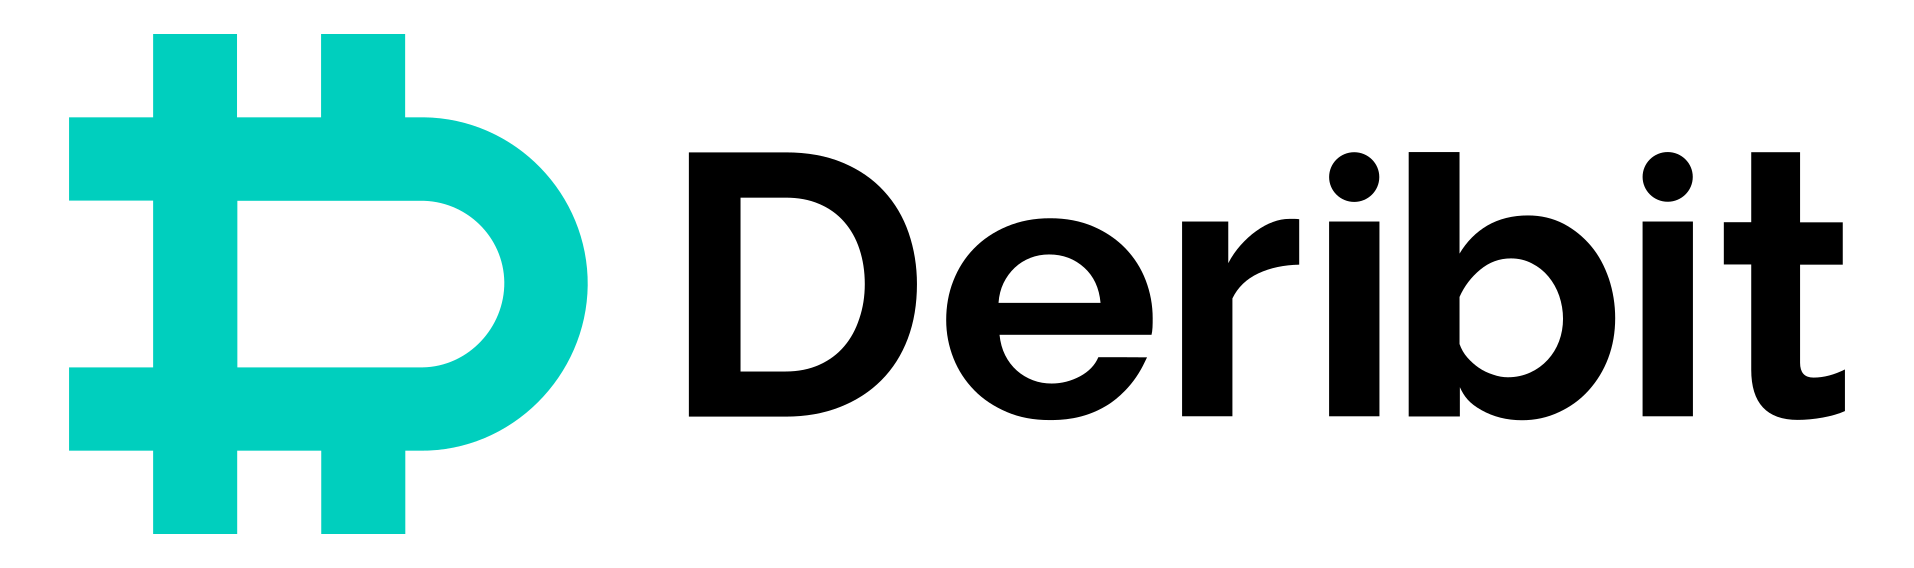 Deribit_logo